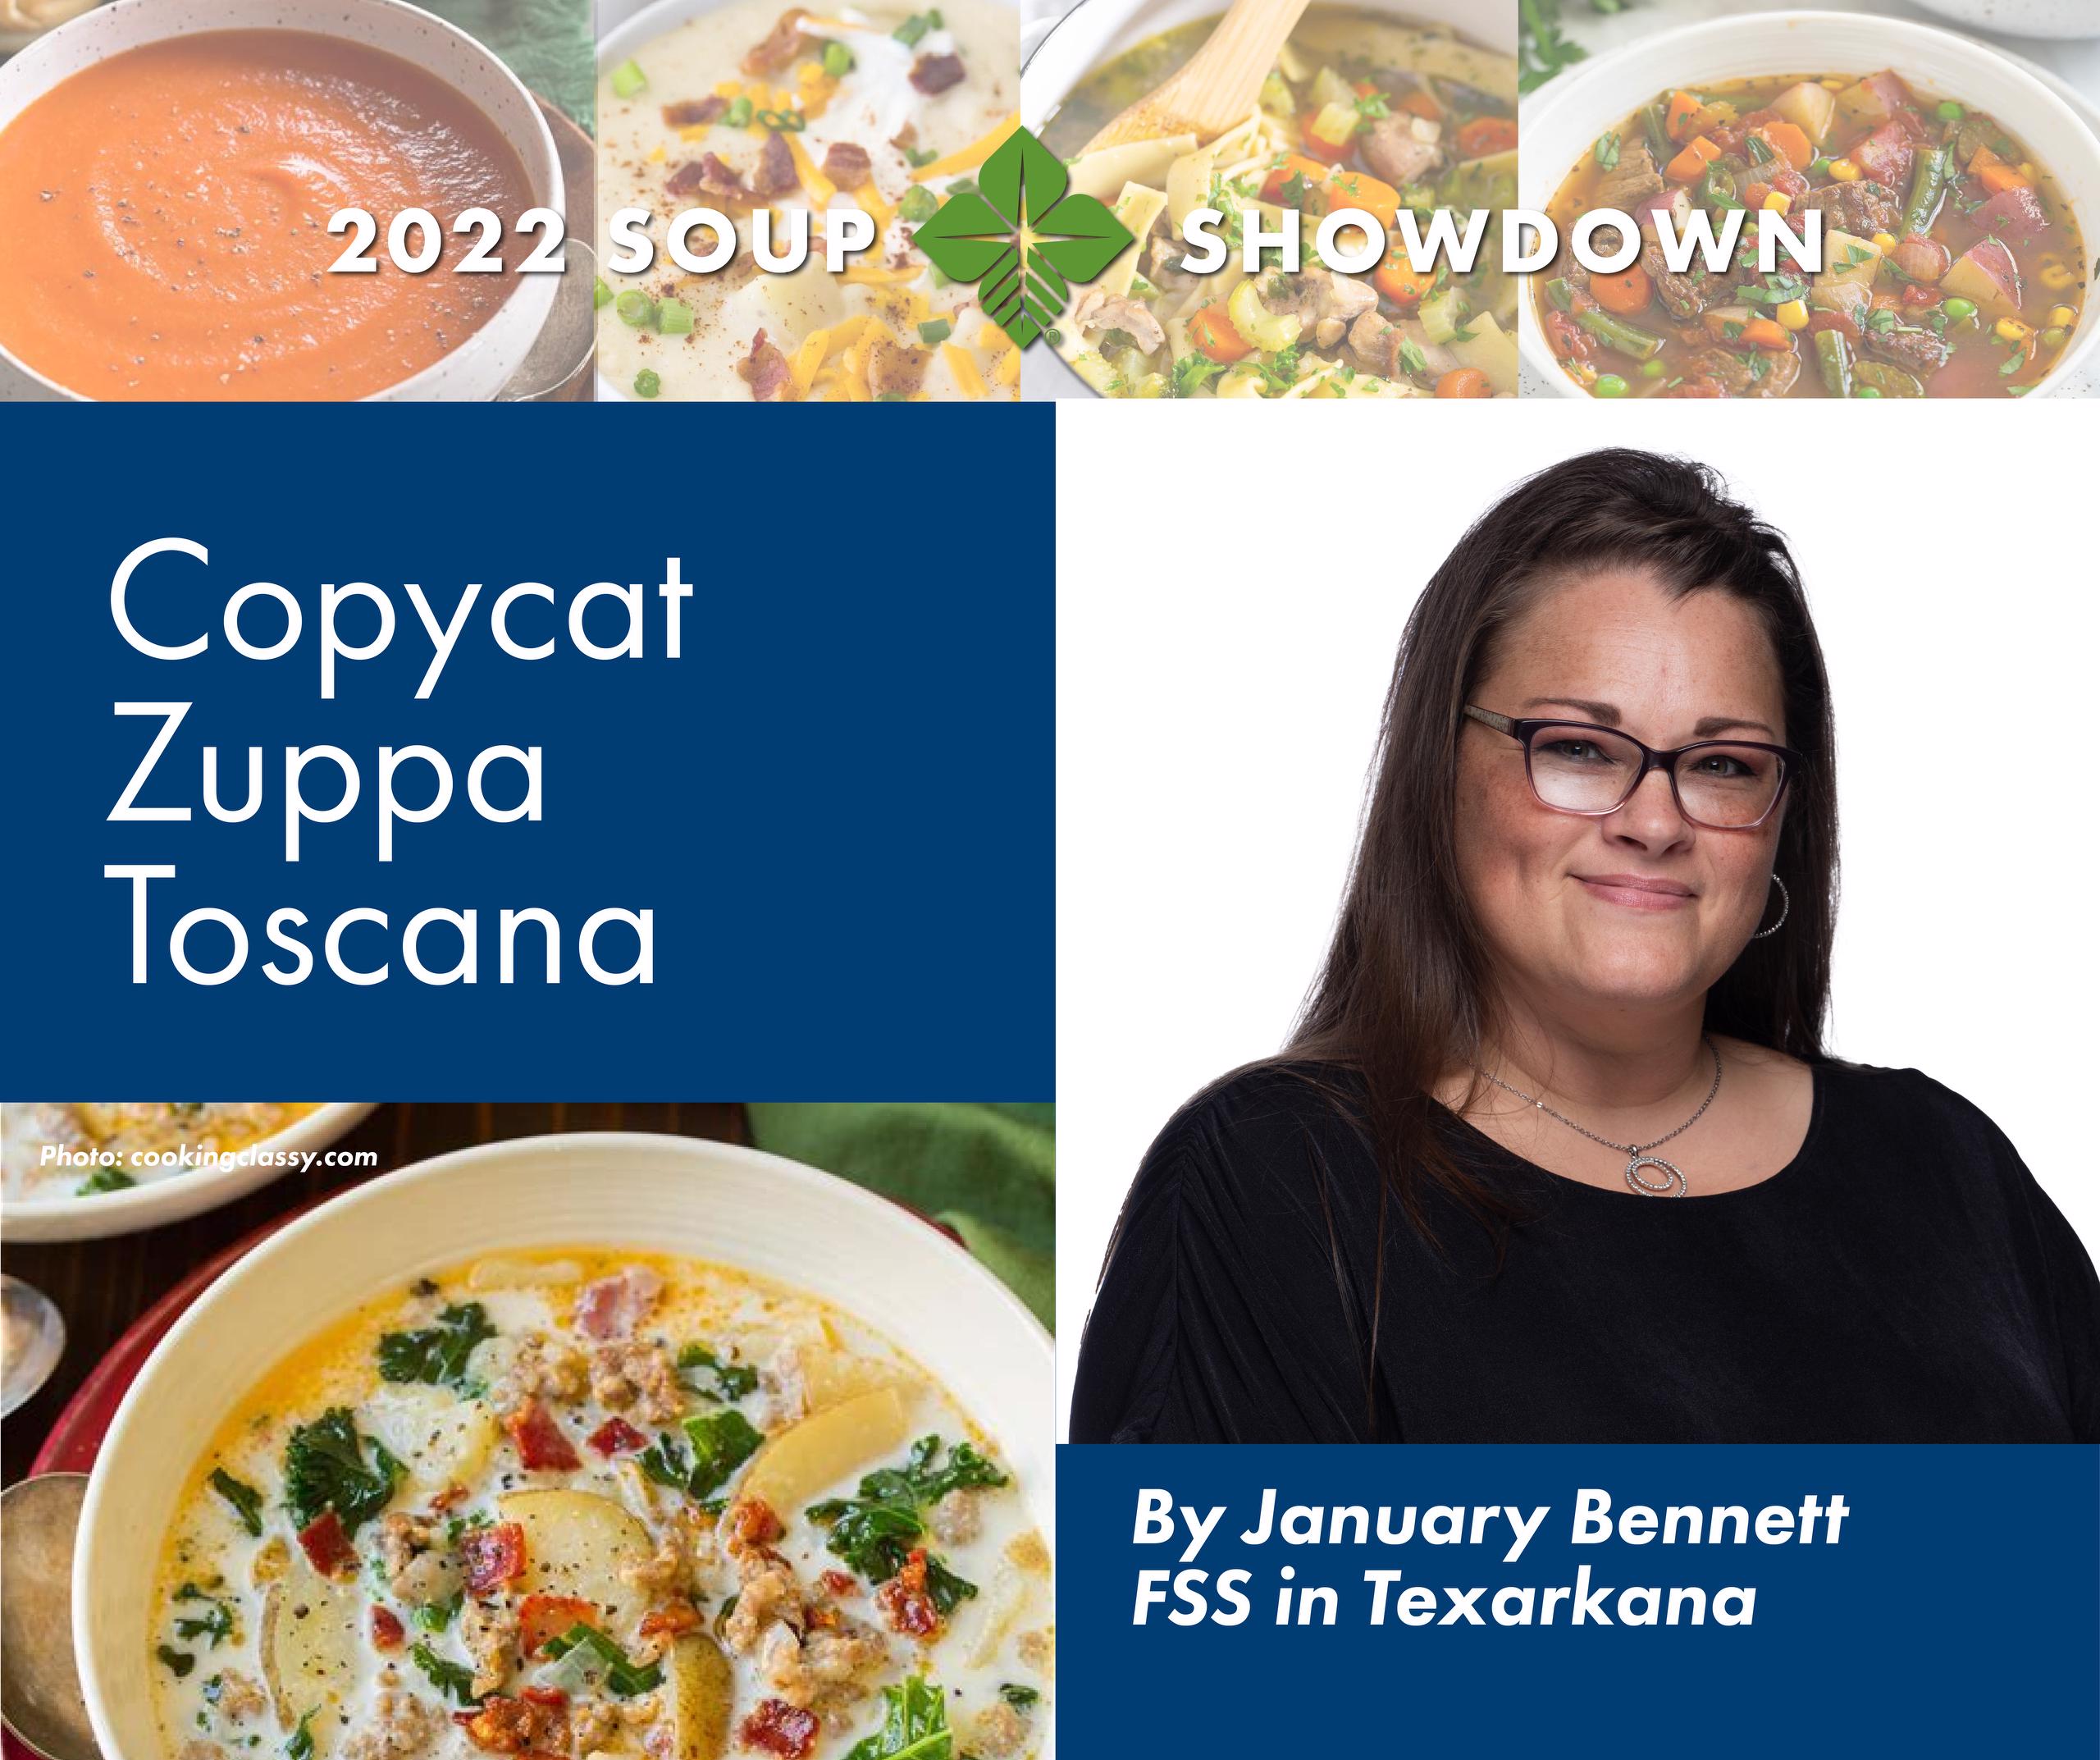 Copy reads: 2022 soup showdown, Copycat Zuppa Toscana, by January Bennett, FSS in Texarkana. Headshot of January, bowl of soup.